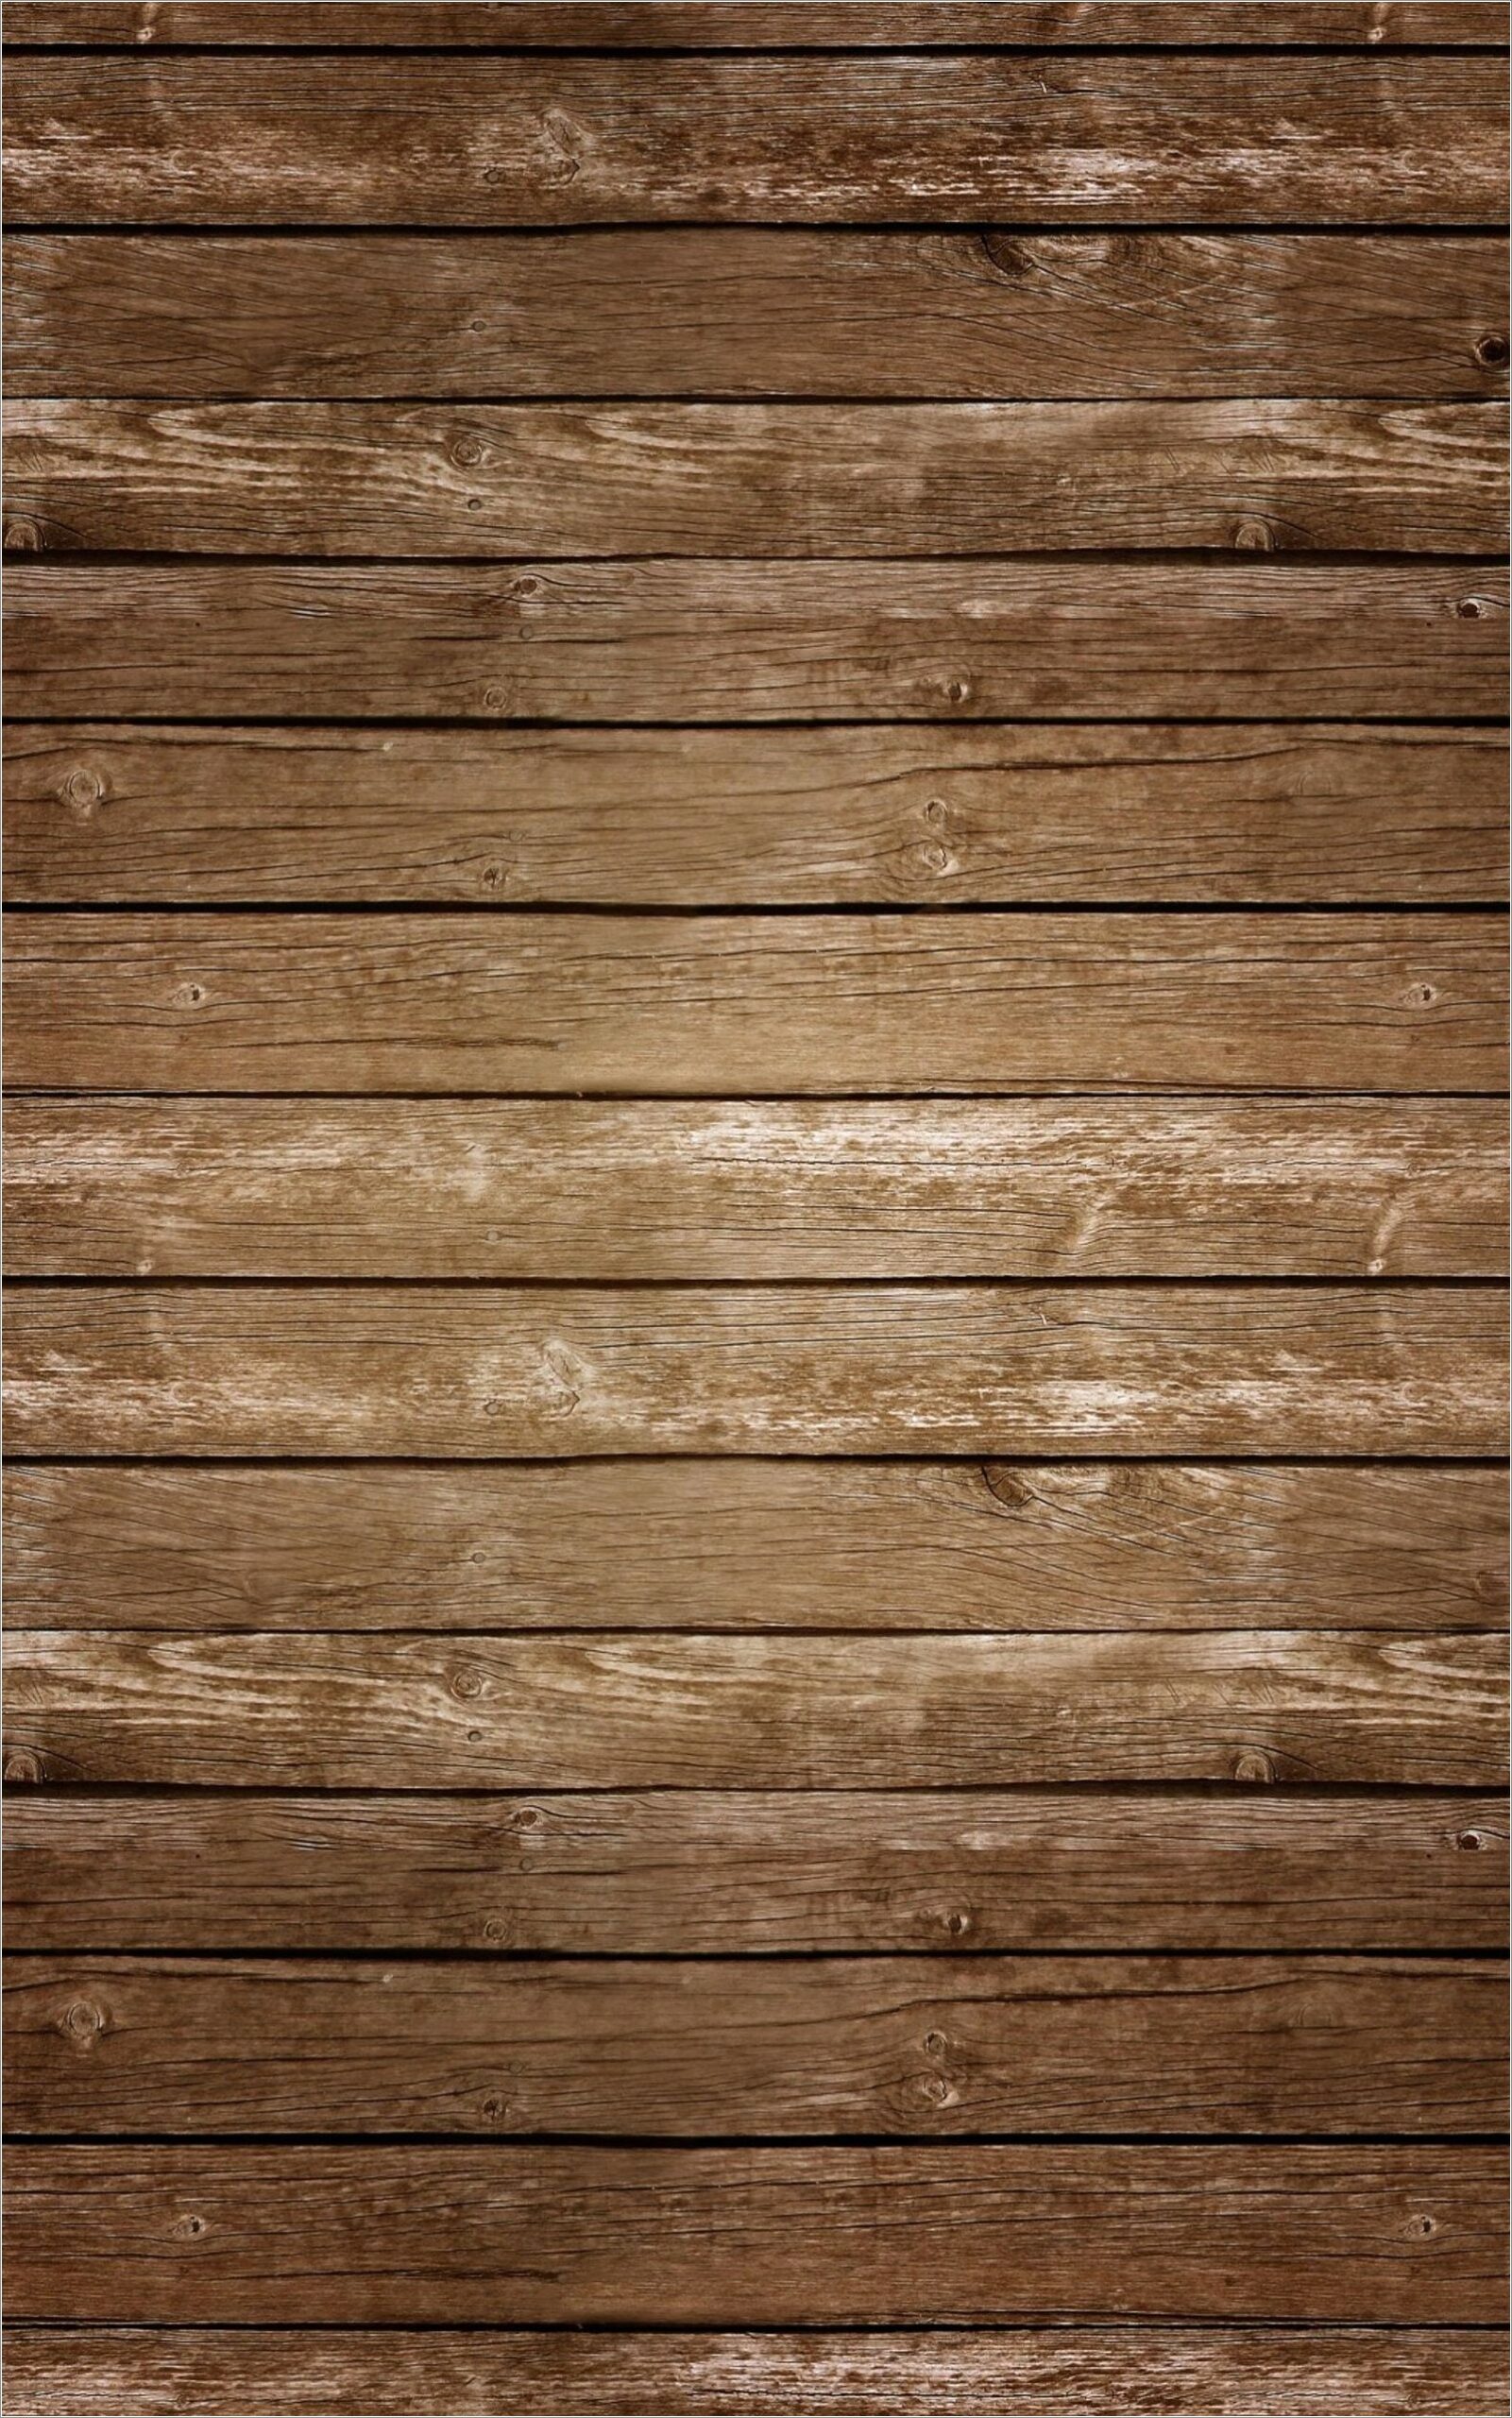 Rustic Wood Invitation Background